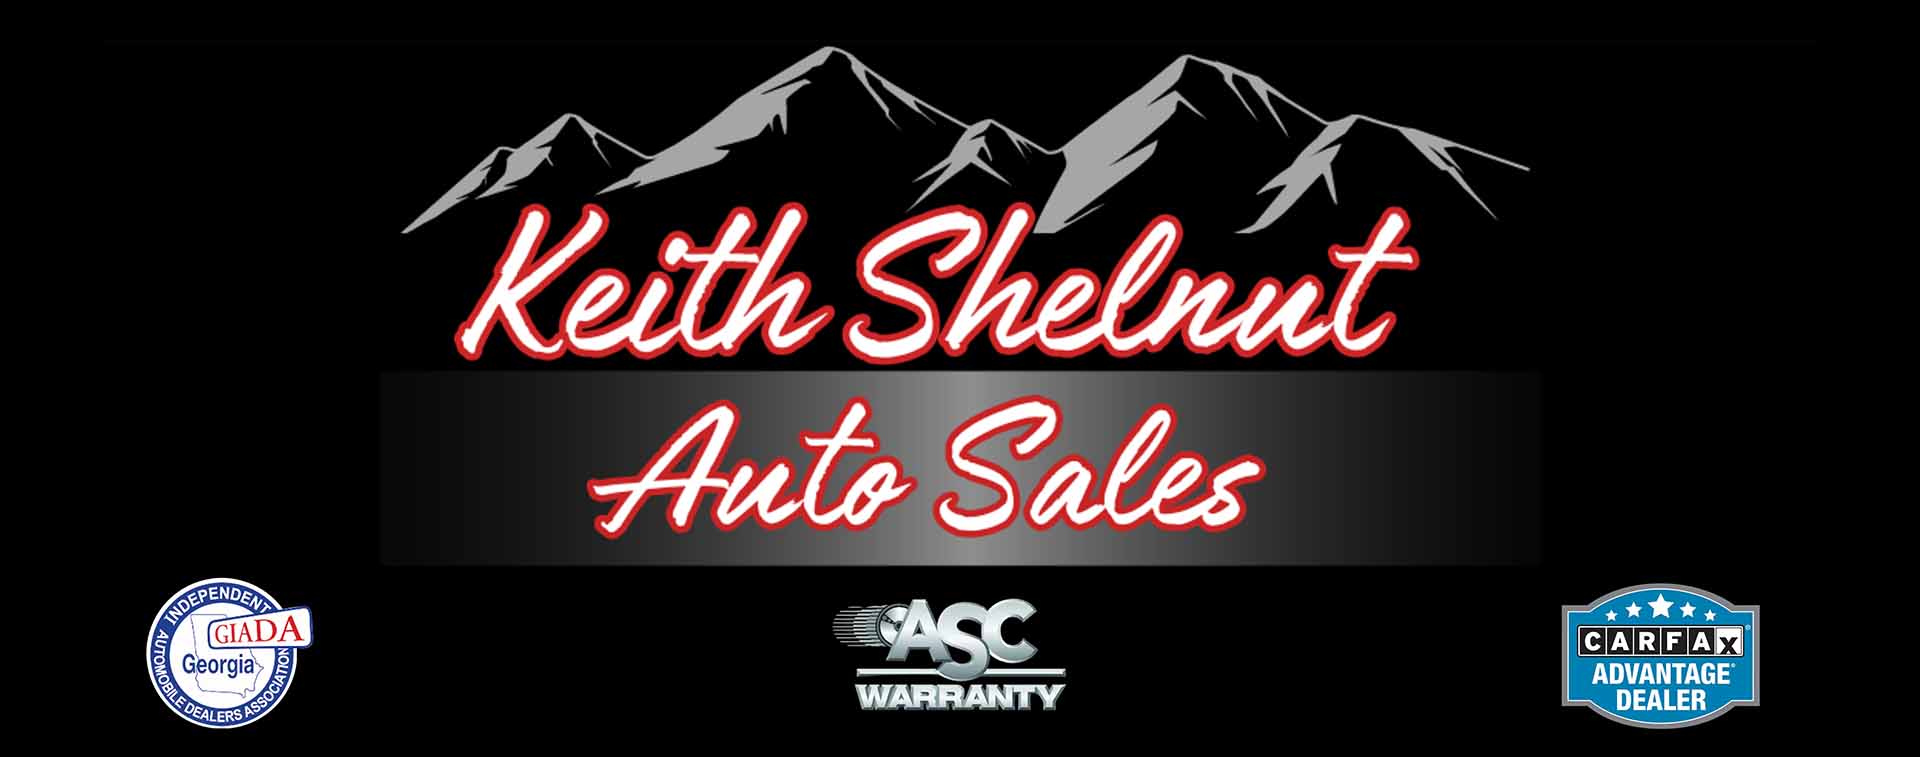 Keith Shelnut Auto Sales